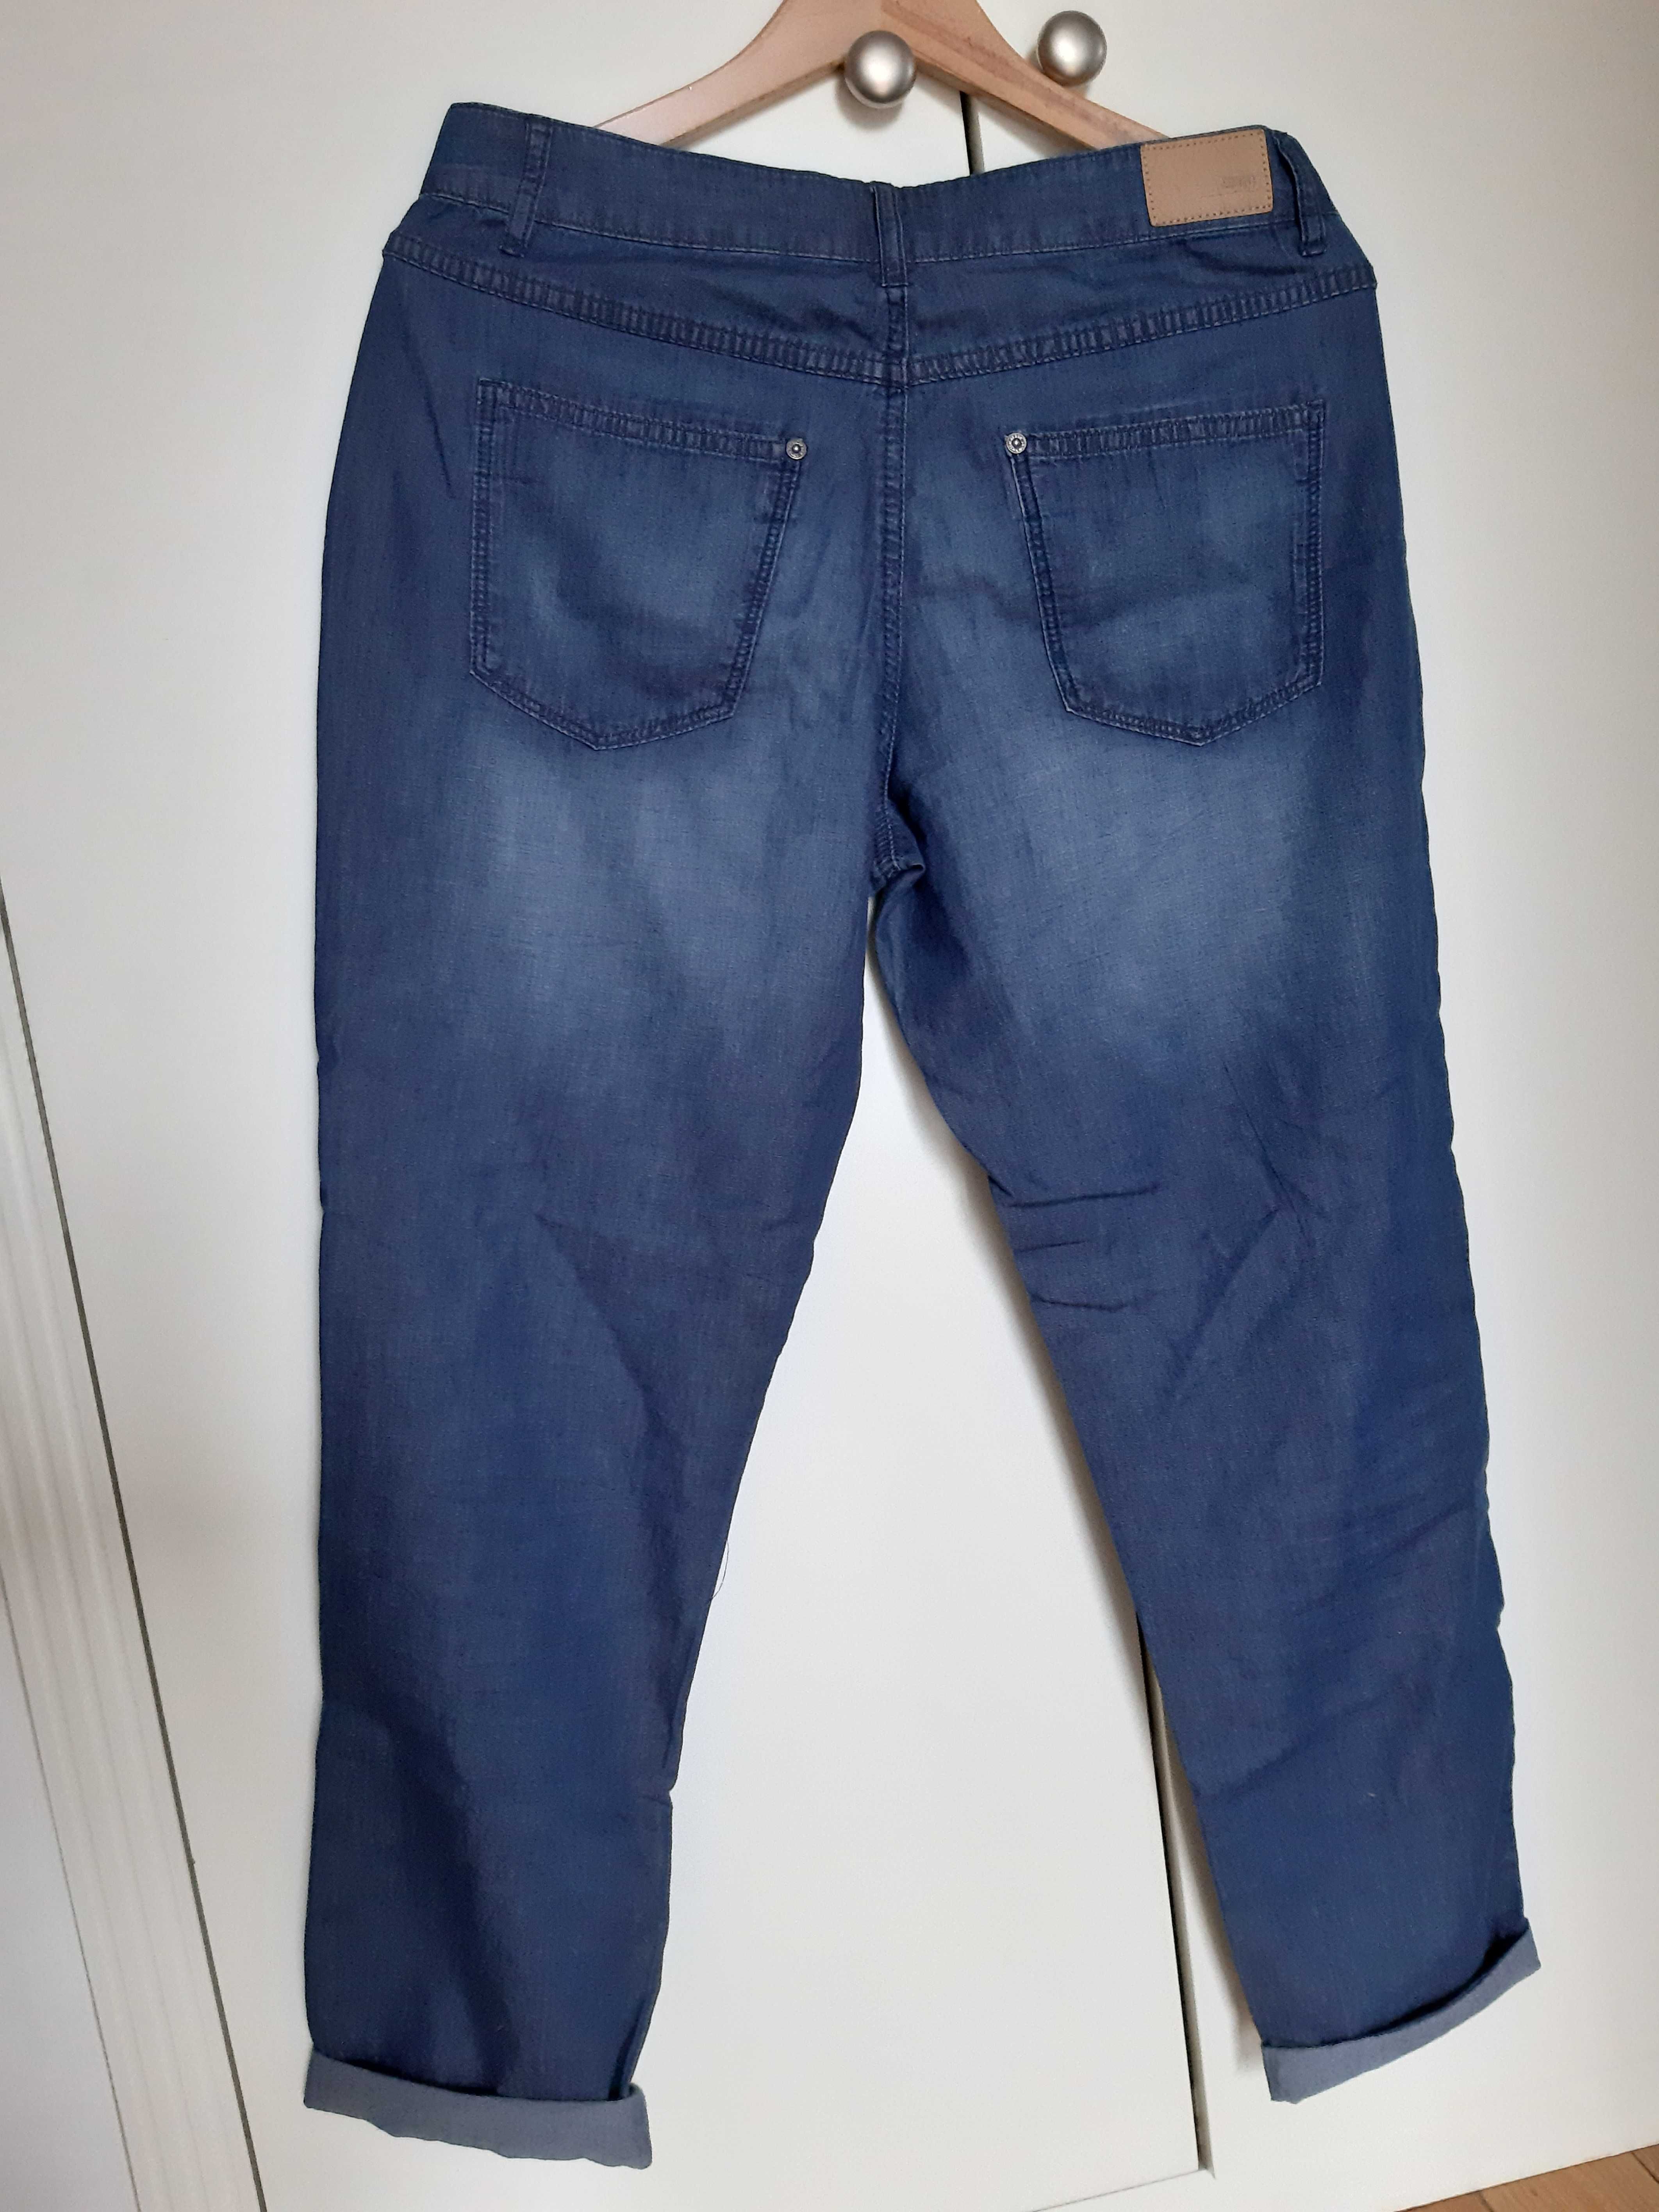 Spodnie jeans Yessica 36/38 C&A